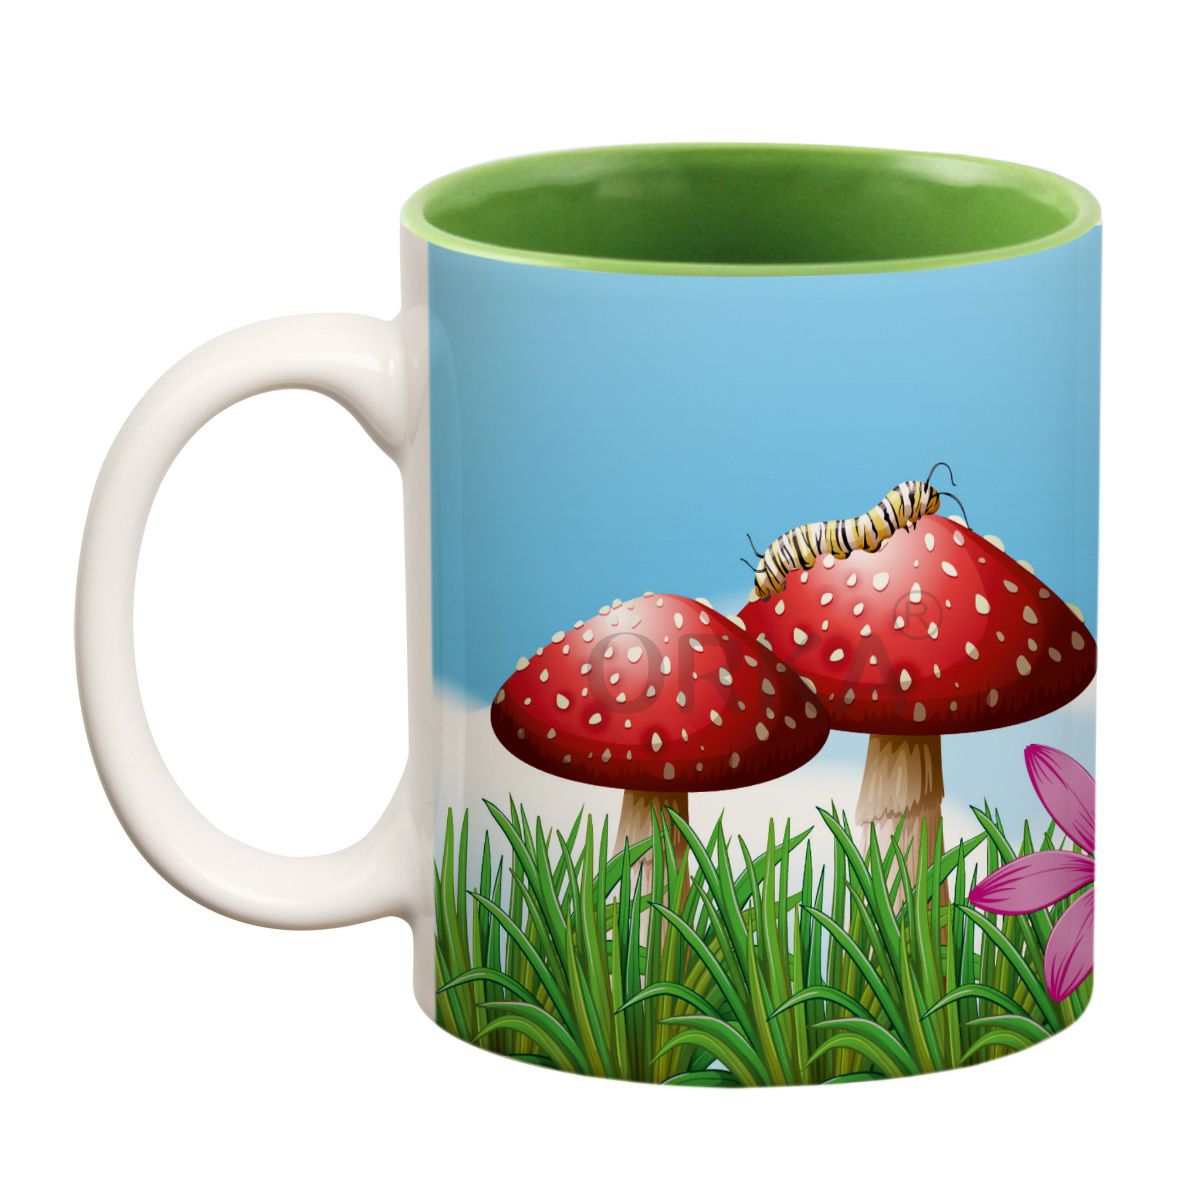 ORKA Coffee Mug Nature Printed (mushroom)Theme 11 Oz  